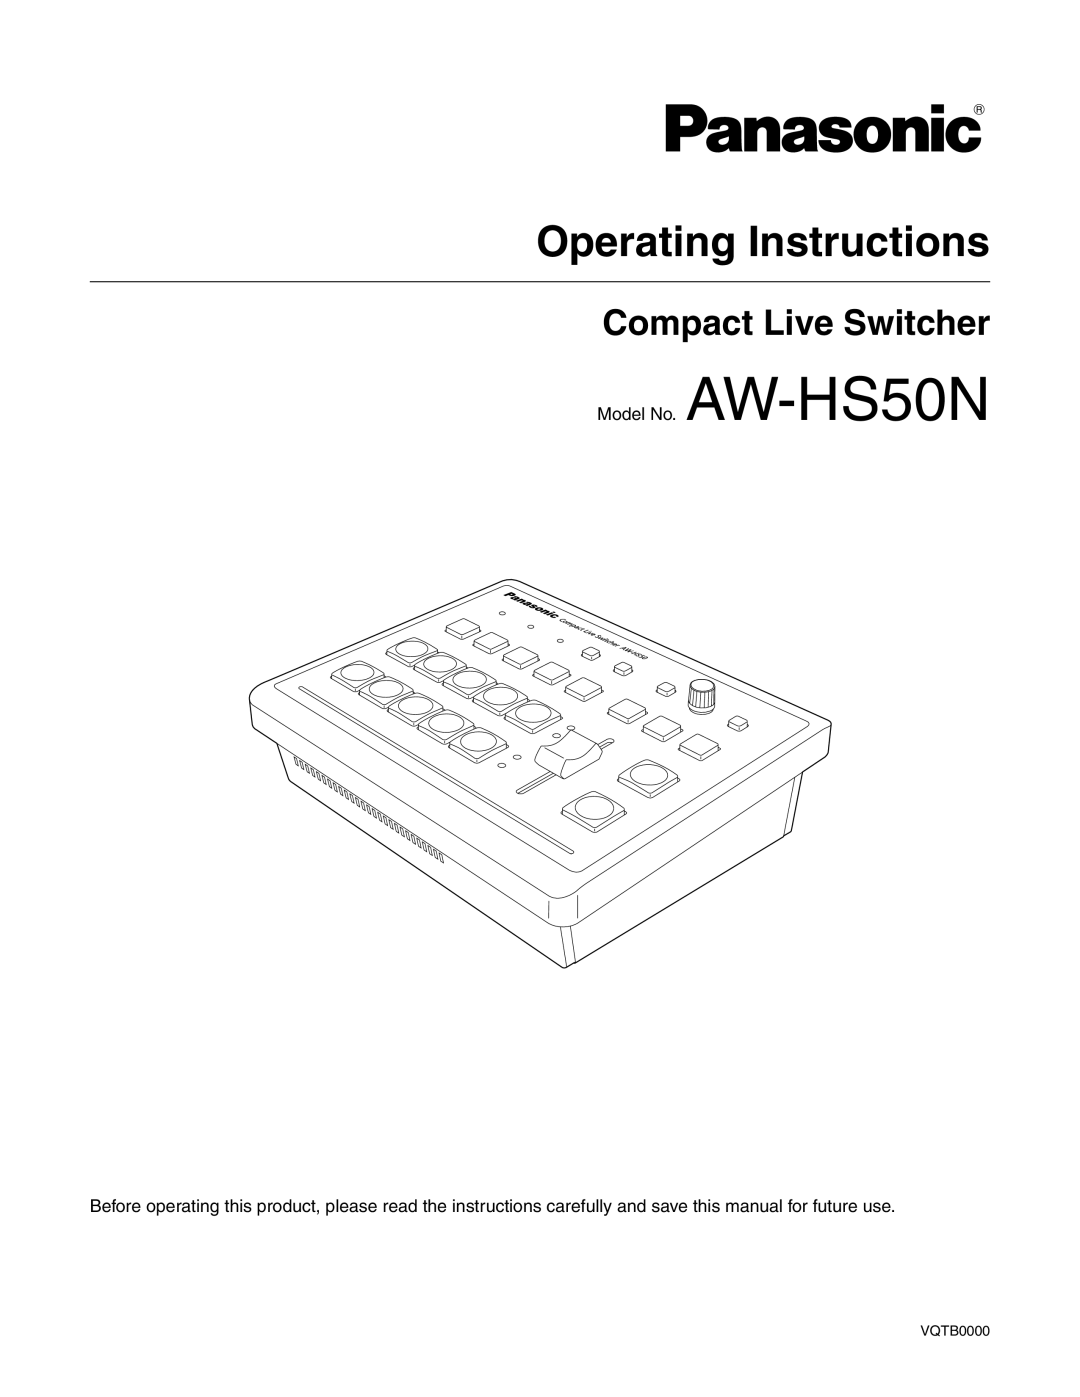 Panasonic operating instructions Compact Live Switcher, Model No. AW-HS50N, Operating Instructions 